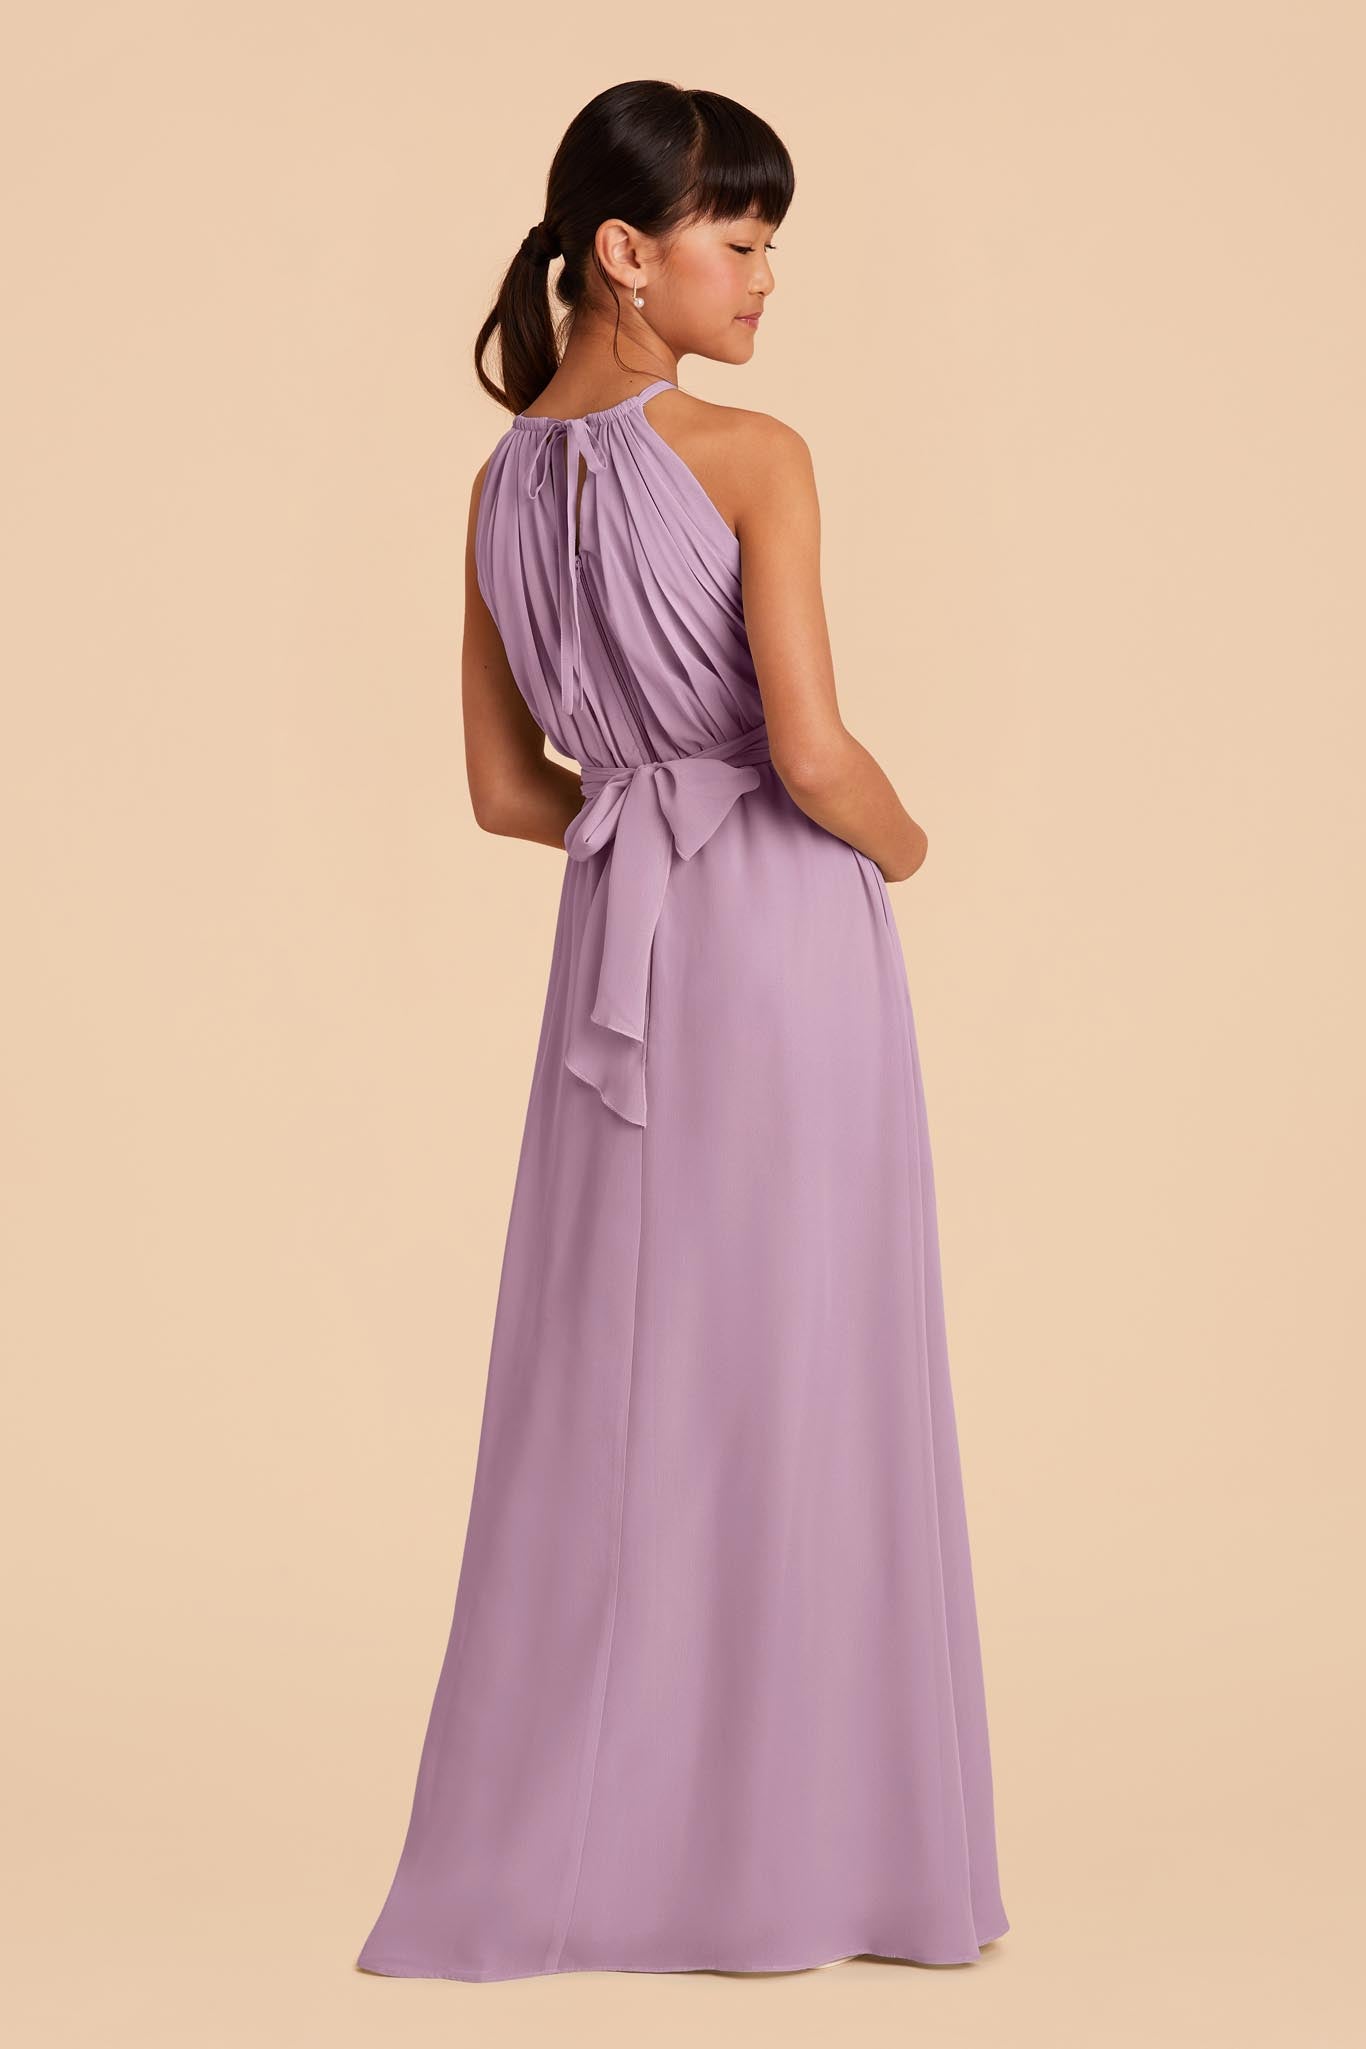 Lavender Sienna Junior Dress by Birdy Grey